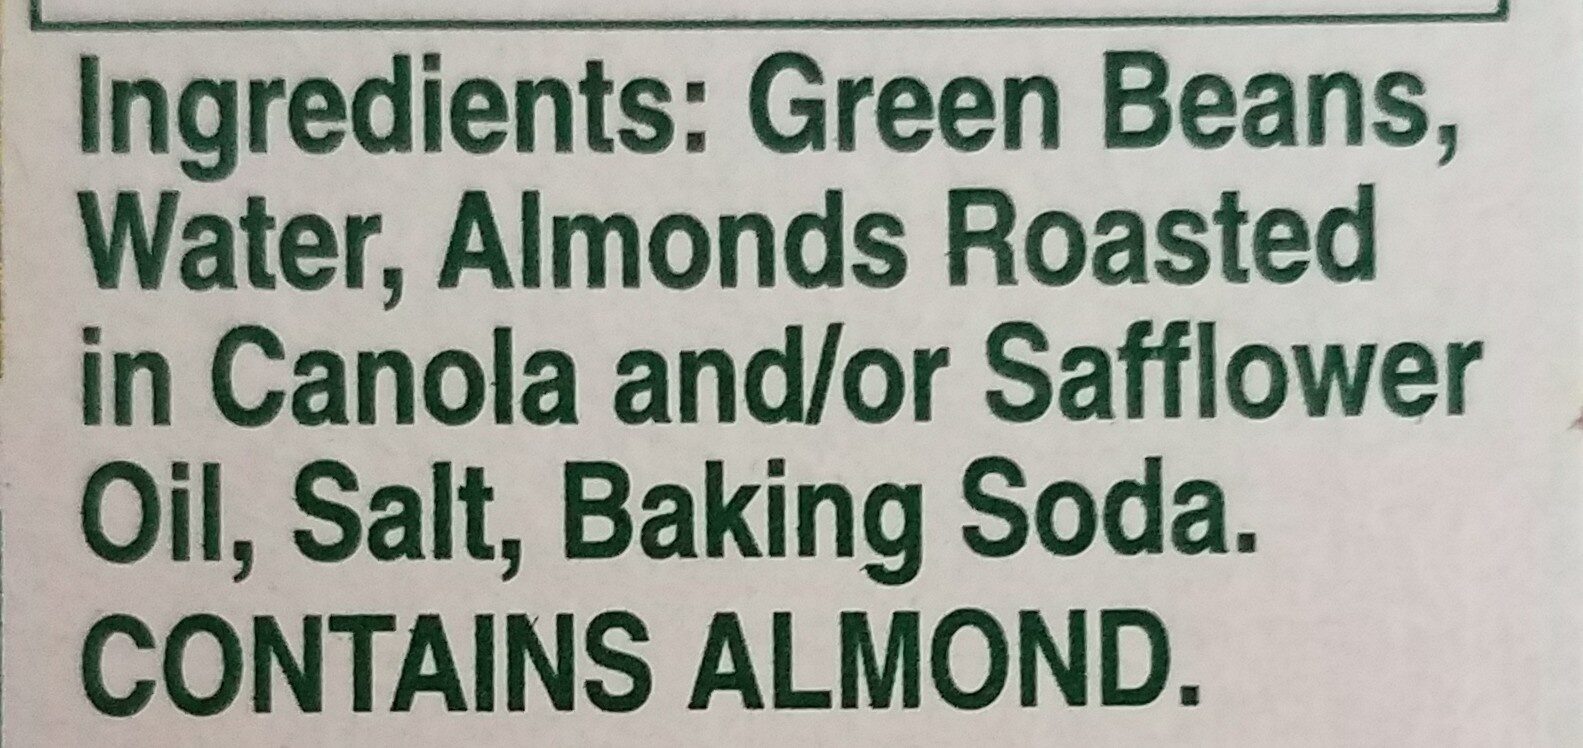 Green beans & almonds - Ingredients